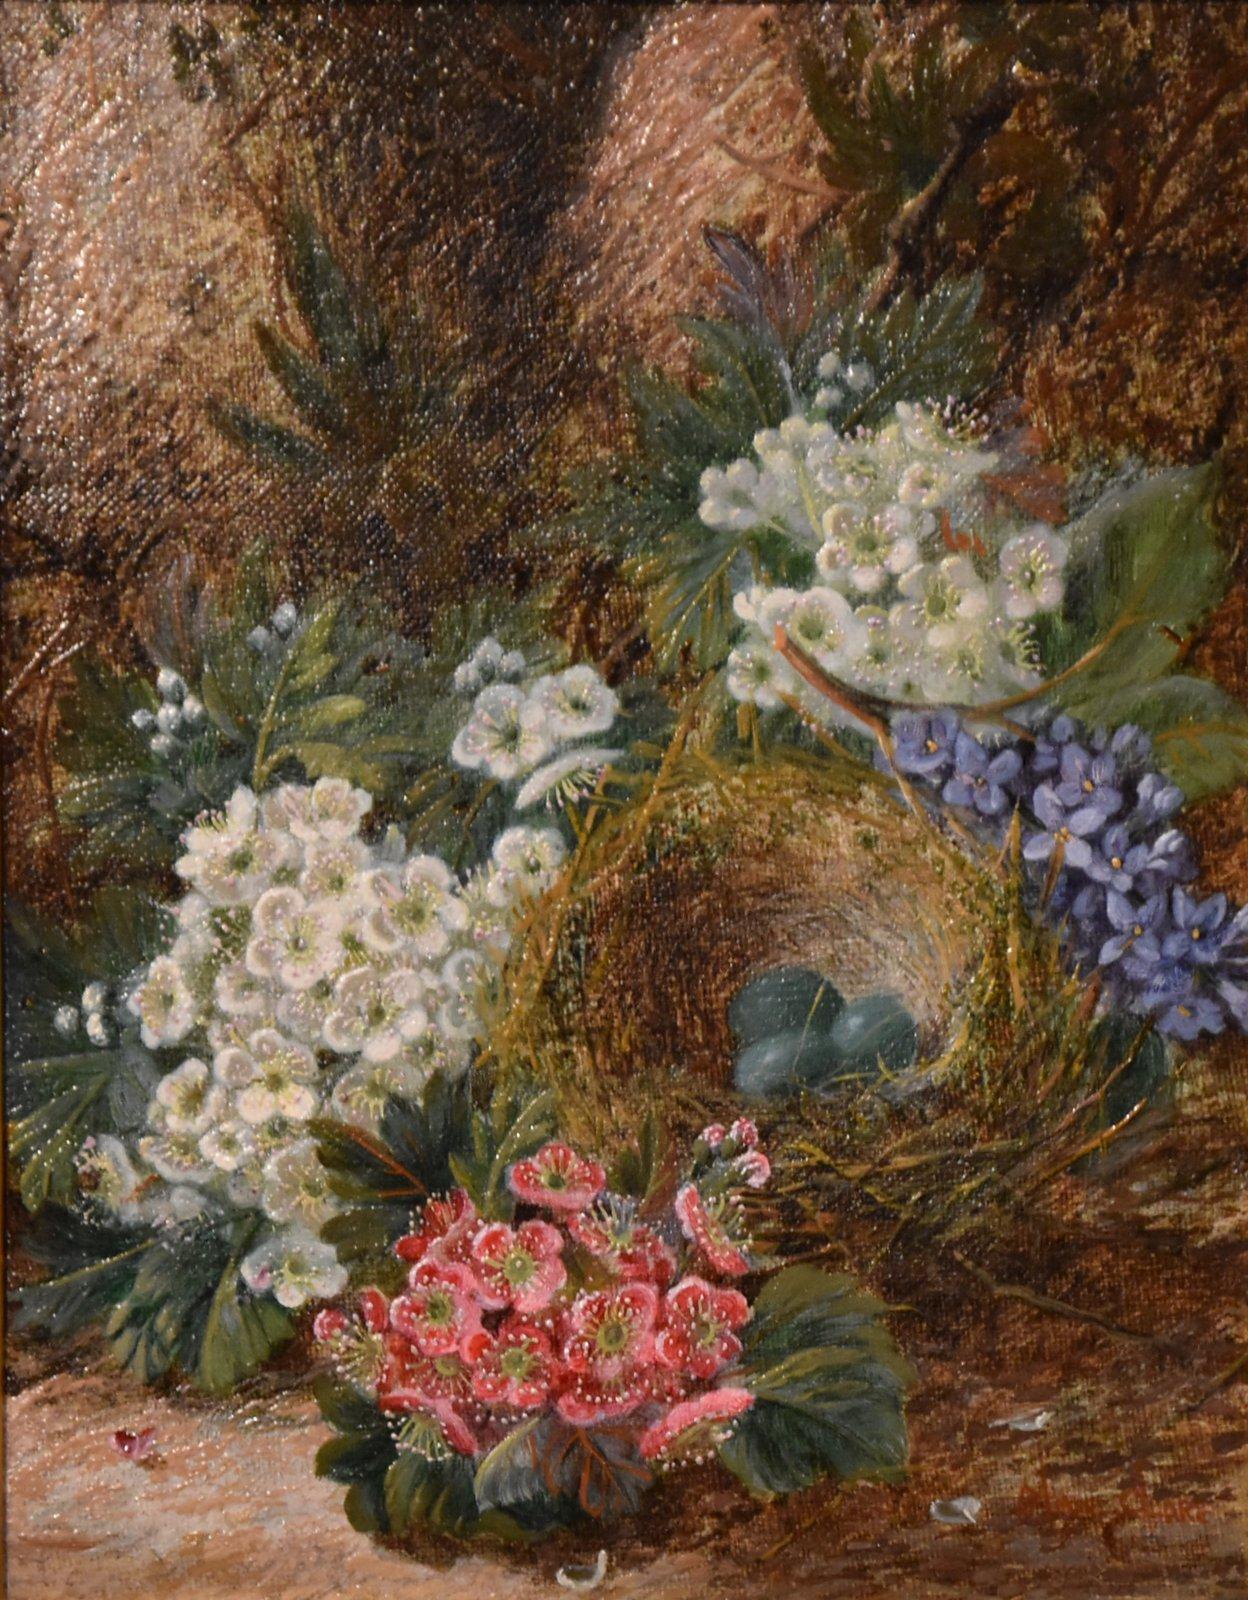 Oil paintings pair by George Clare 